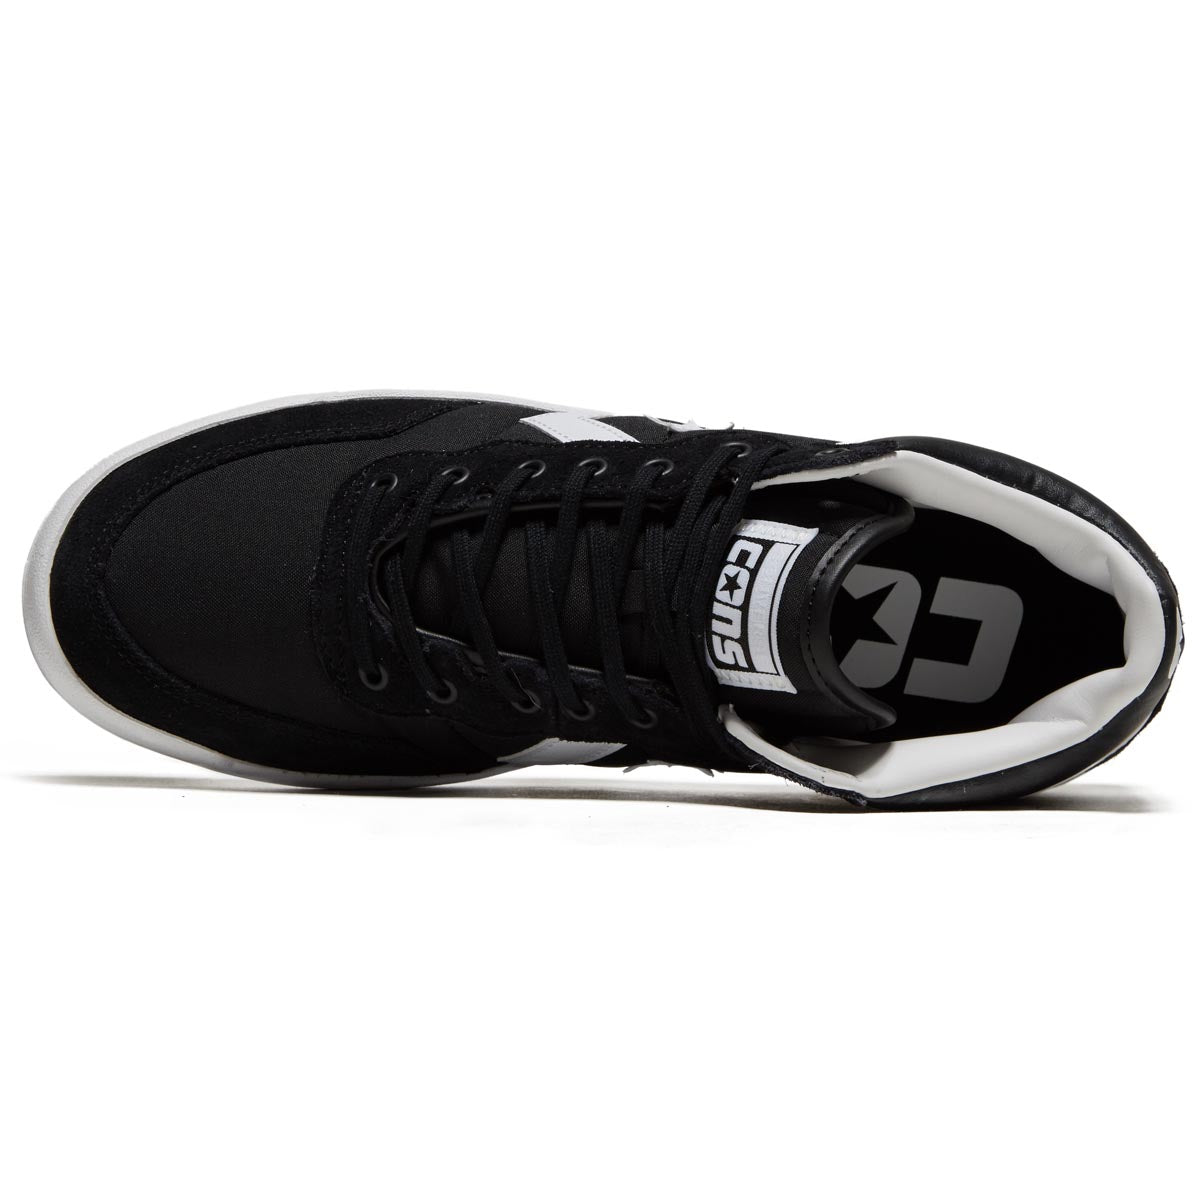 Converse Fastbreak Pro Mid Shoes - Black/White/Black image 3